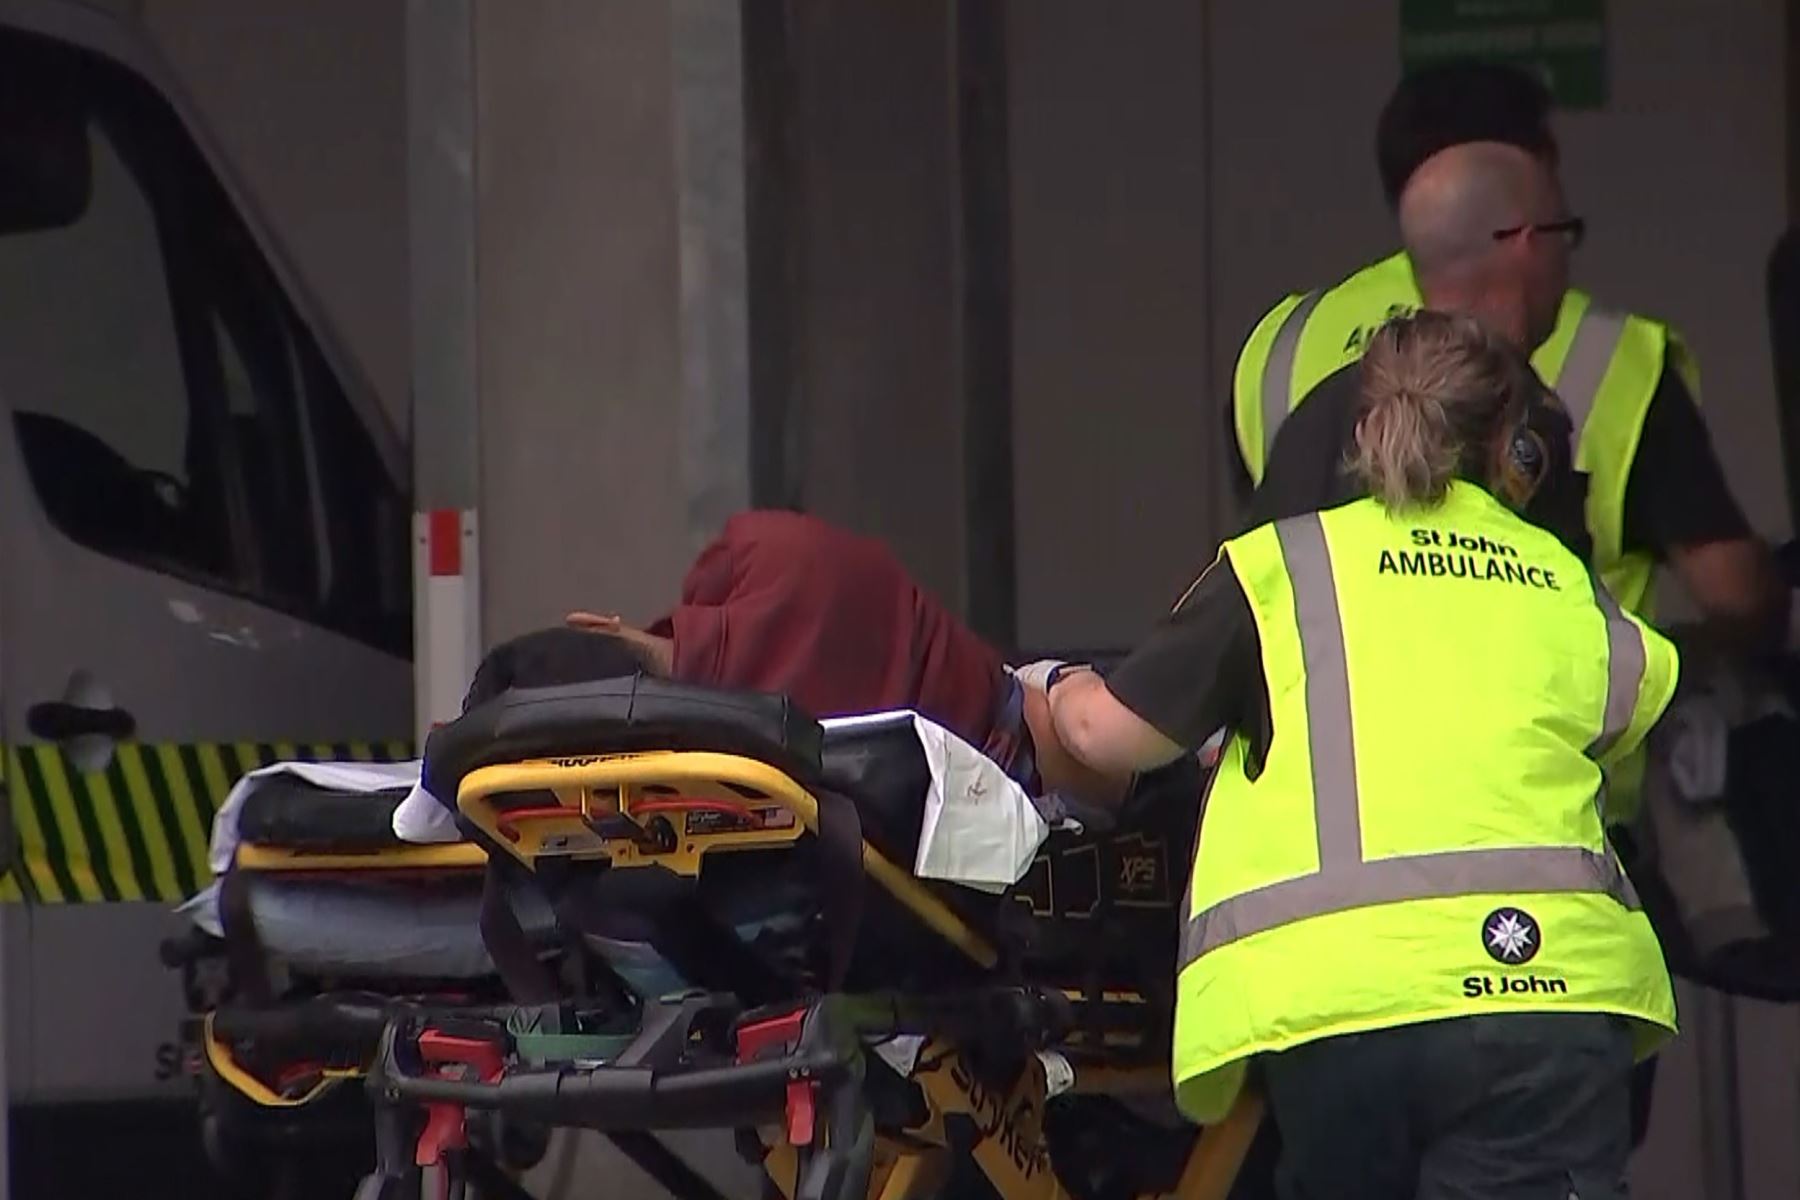 Captura de imagen de TV New Zealand tomada el 15 de marzo de 2019 muestra a una víctima que llega a un hospital luego de los disparos en la mezquita de Christchurch.